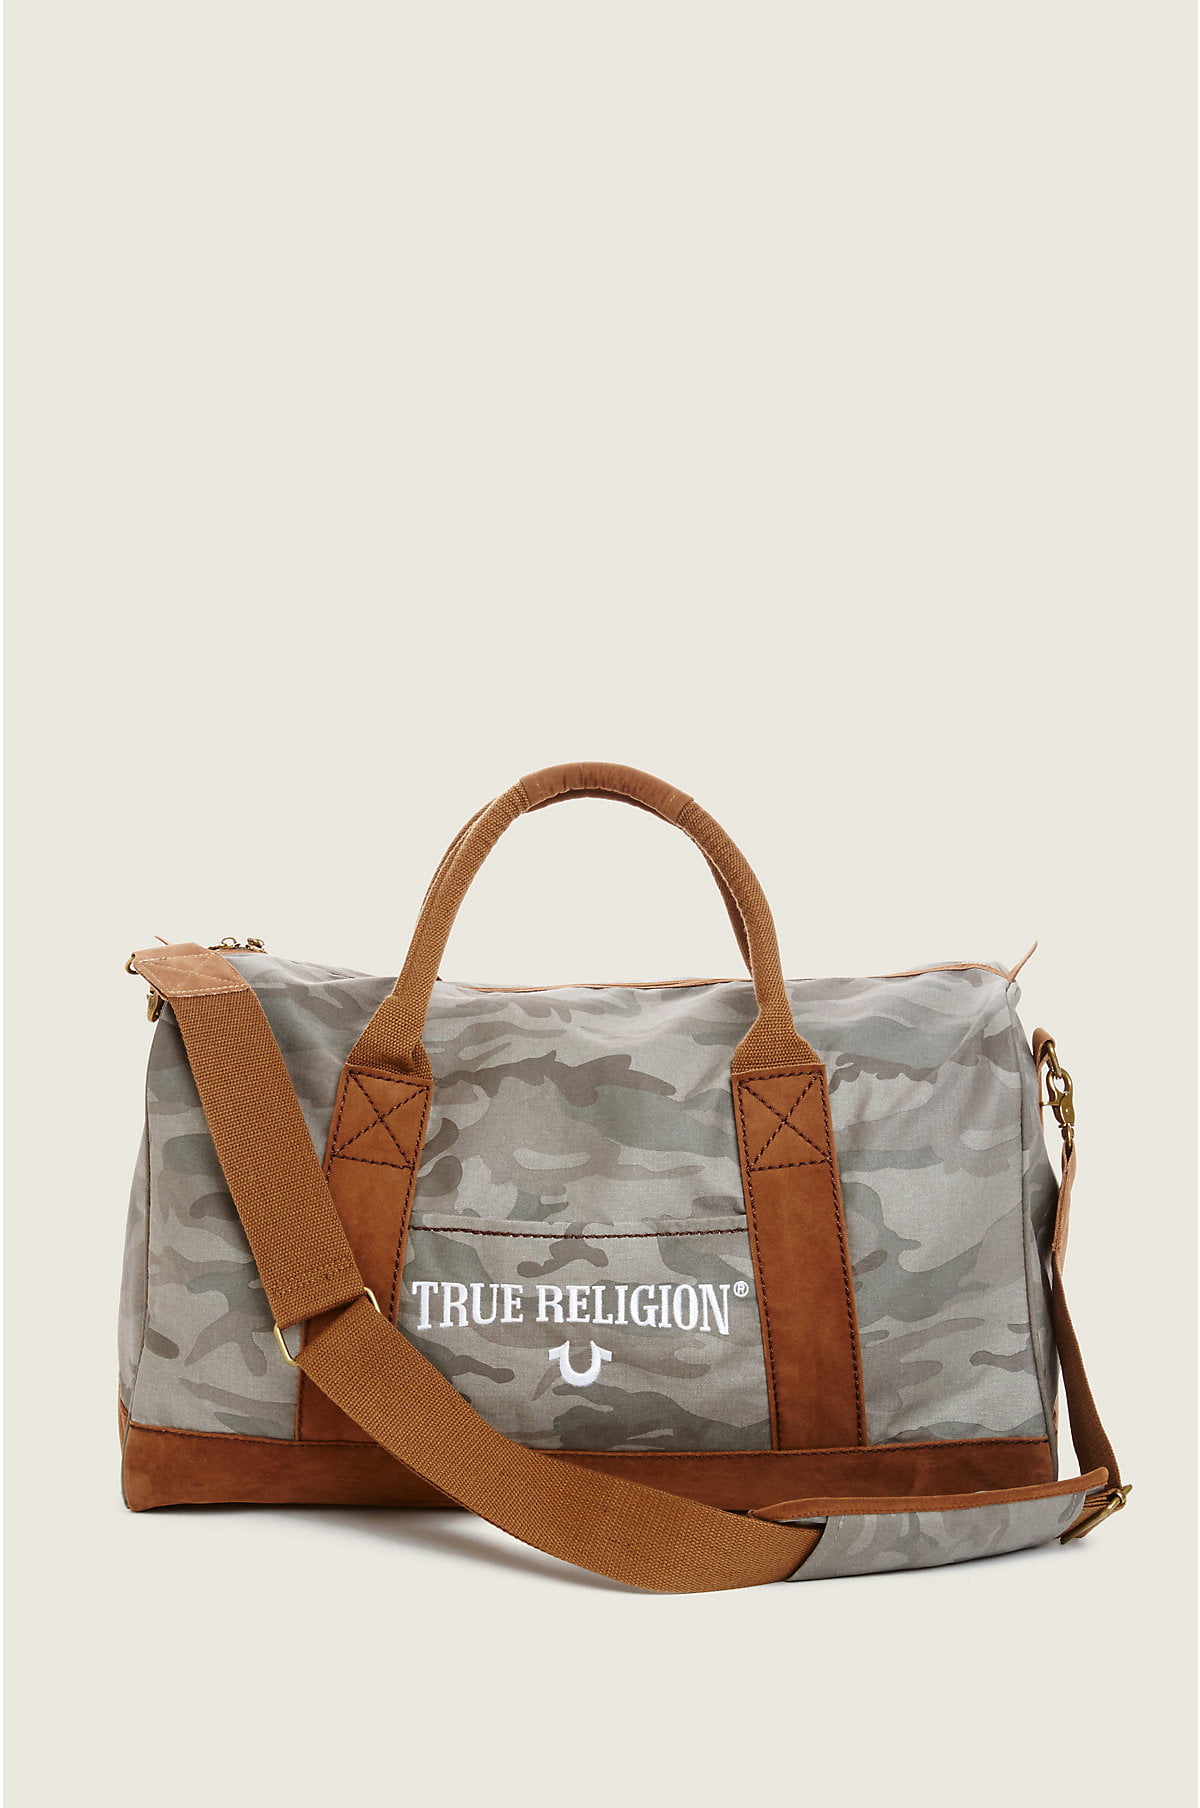 True Religion Men's TR Duffle Bag in 